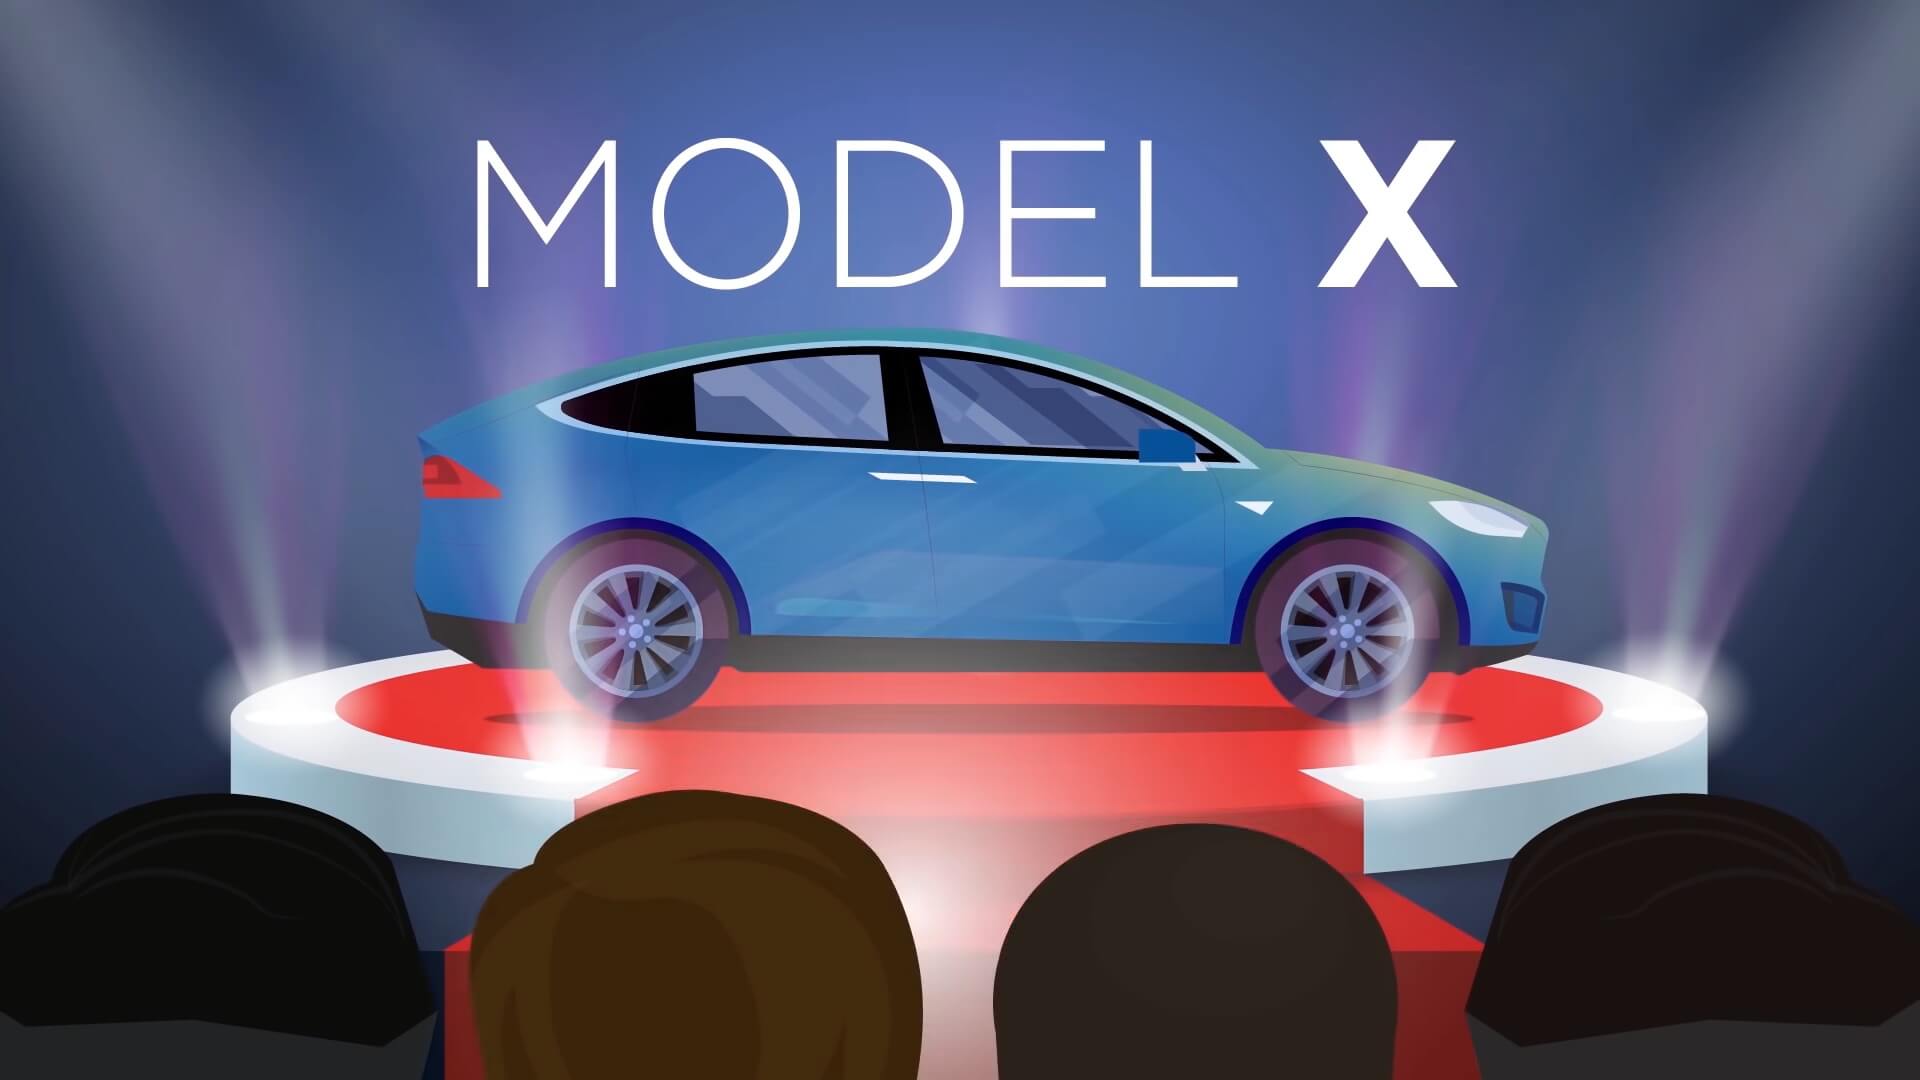 Электромобиль Tesla Model X